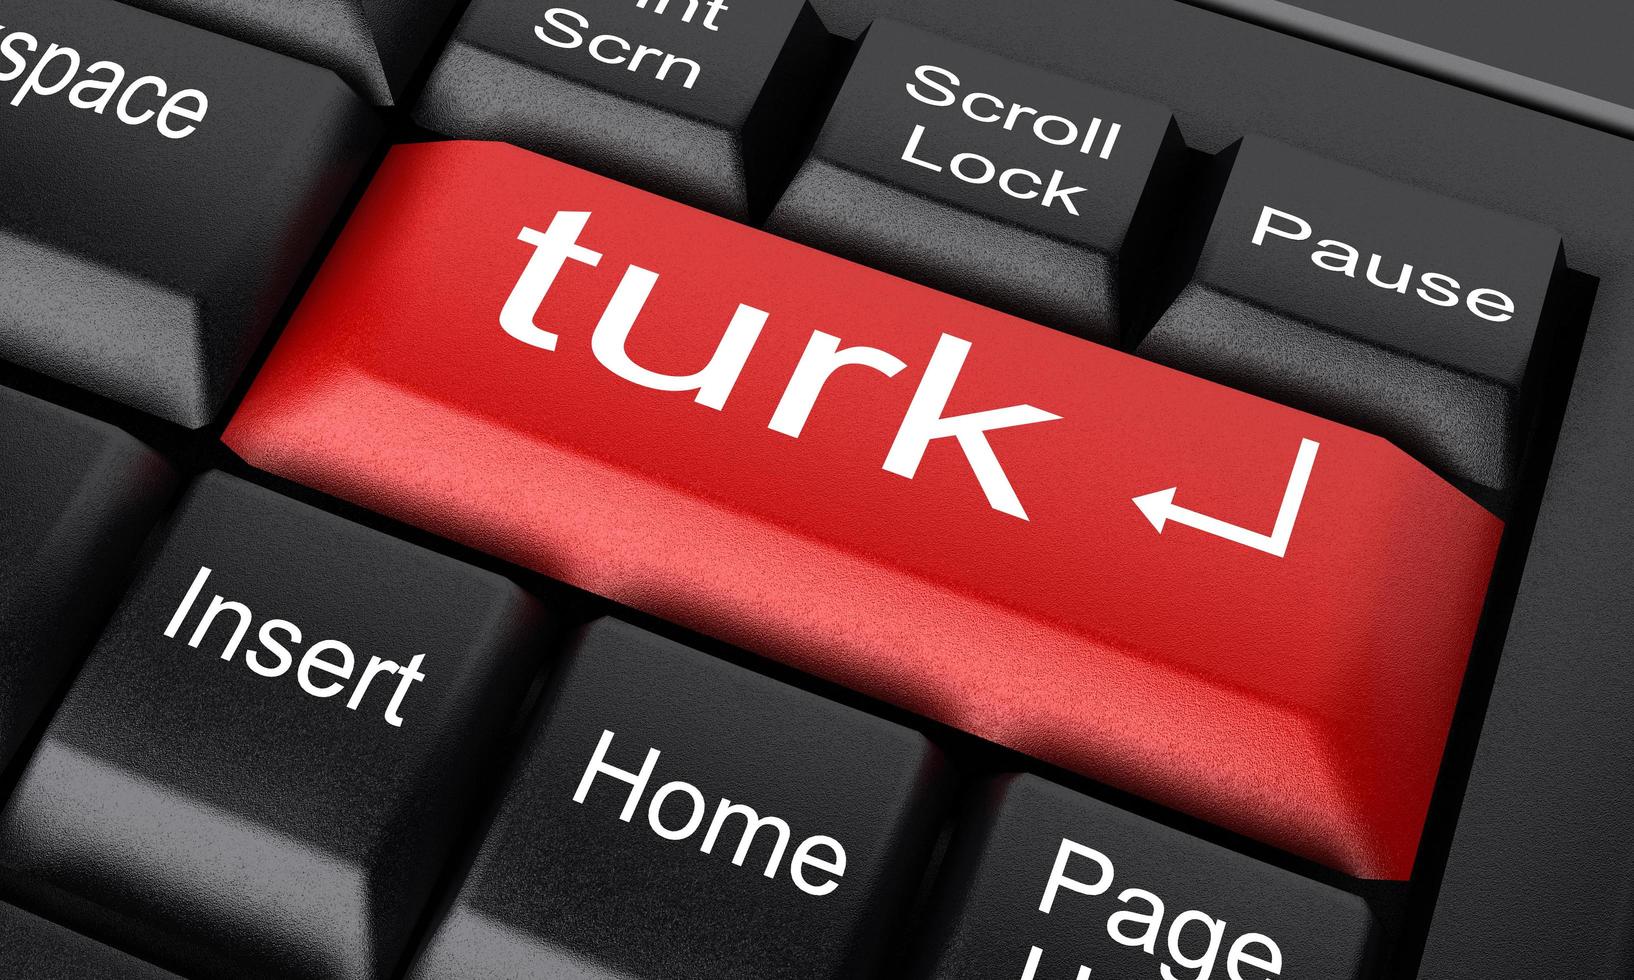 turk word on red keyboard button photo